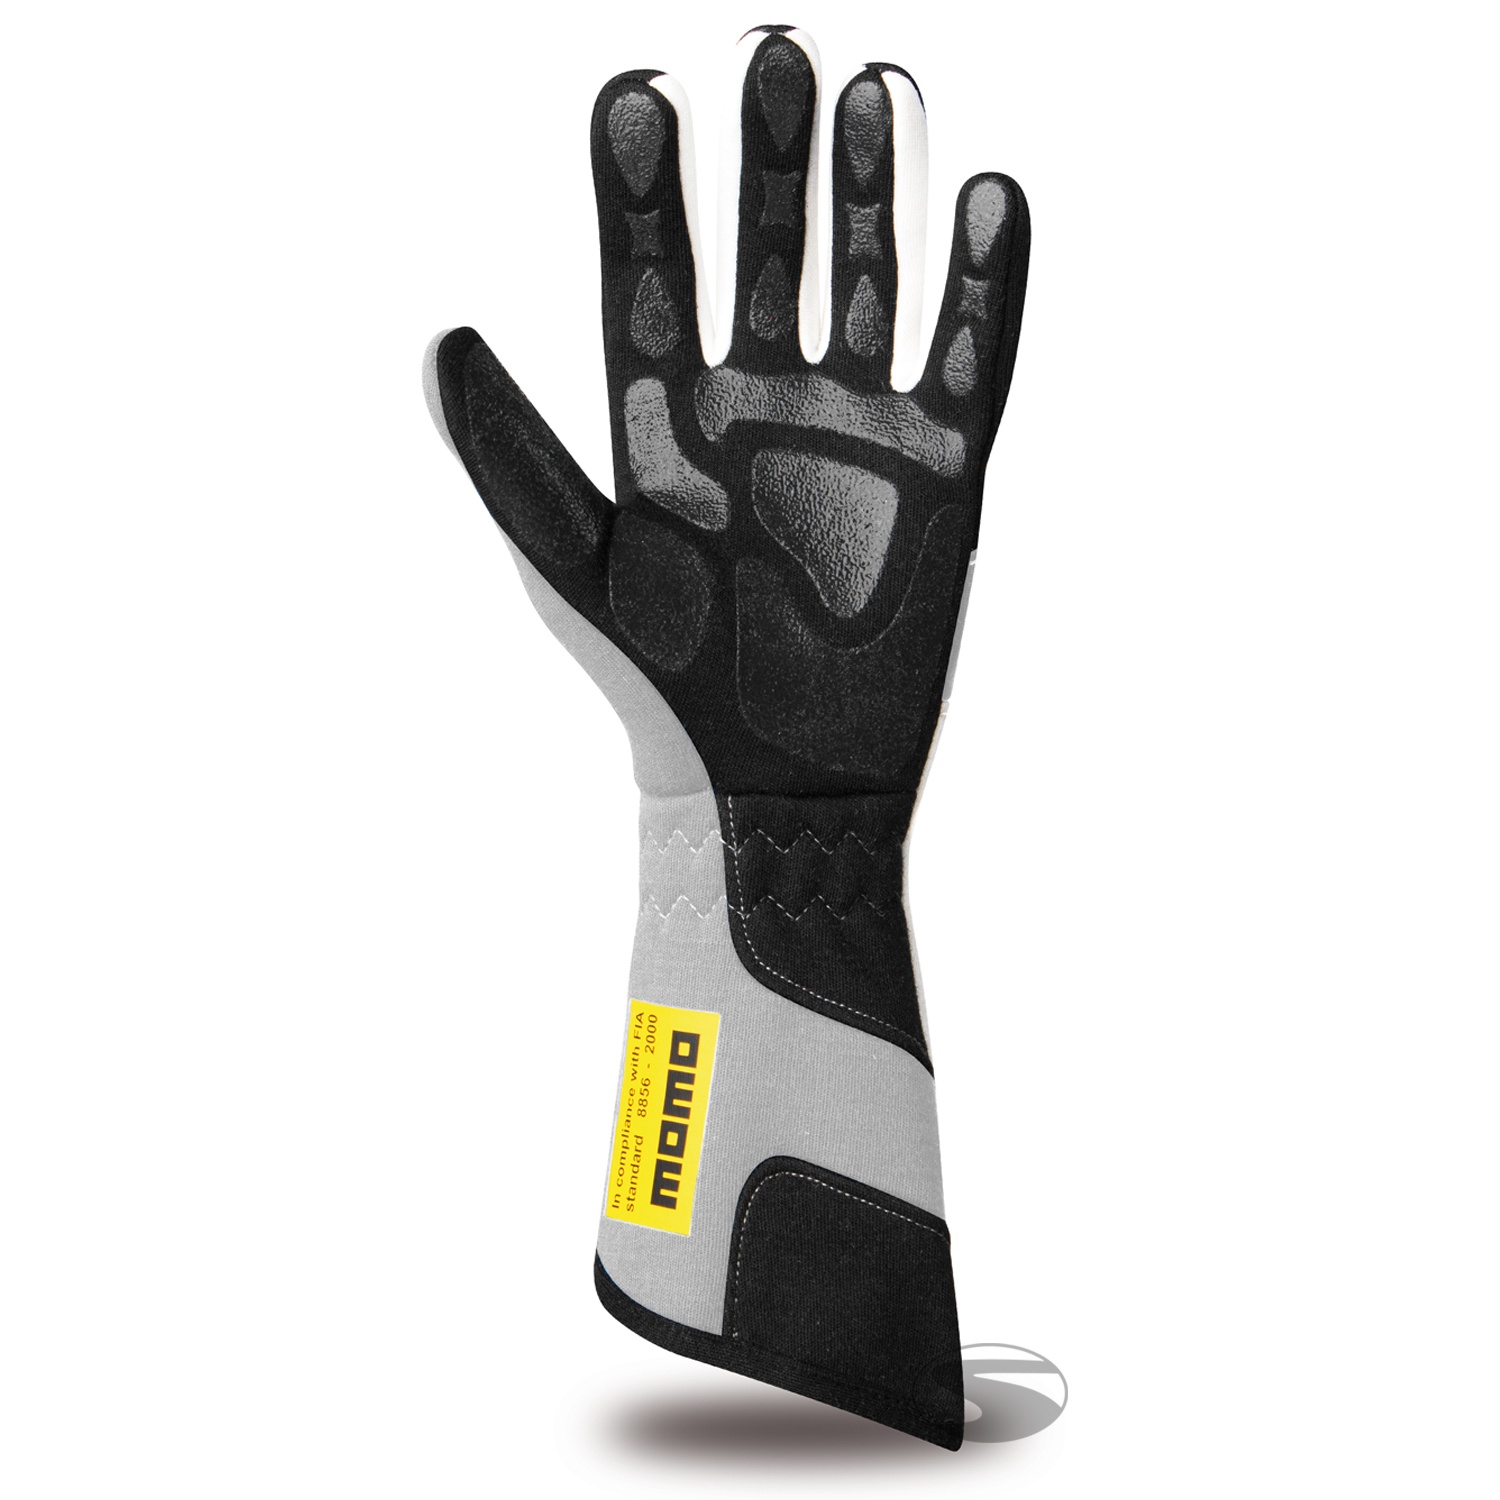 Momo Handschuh X-Treme Pro, grau/schwarz/weiß